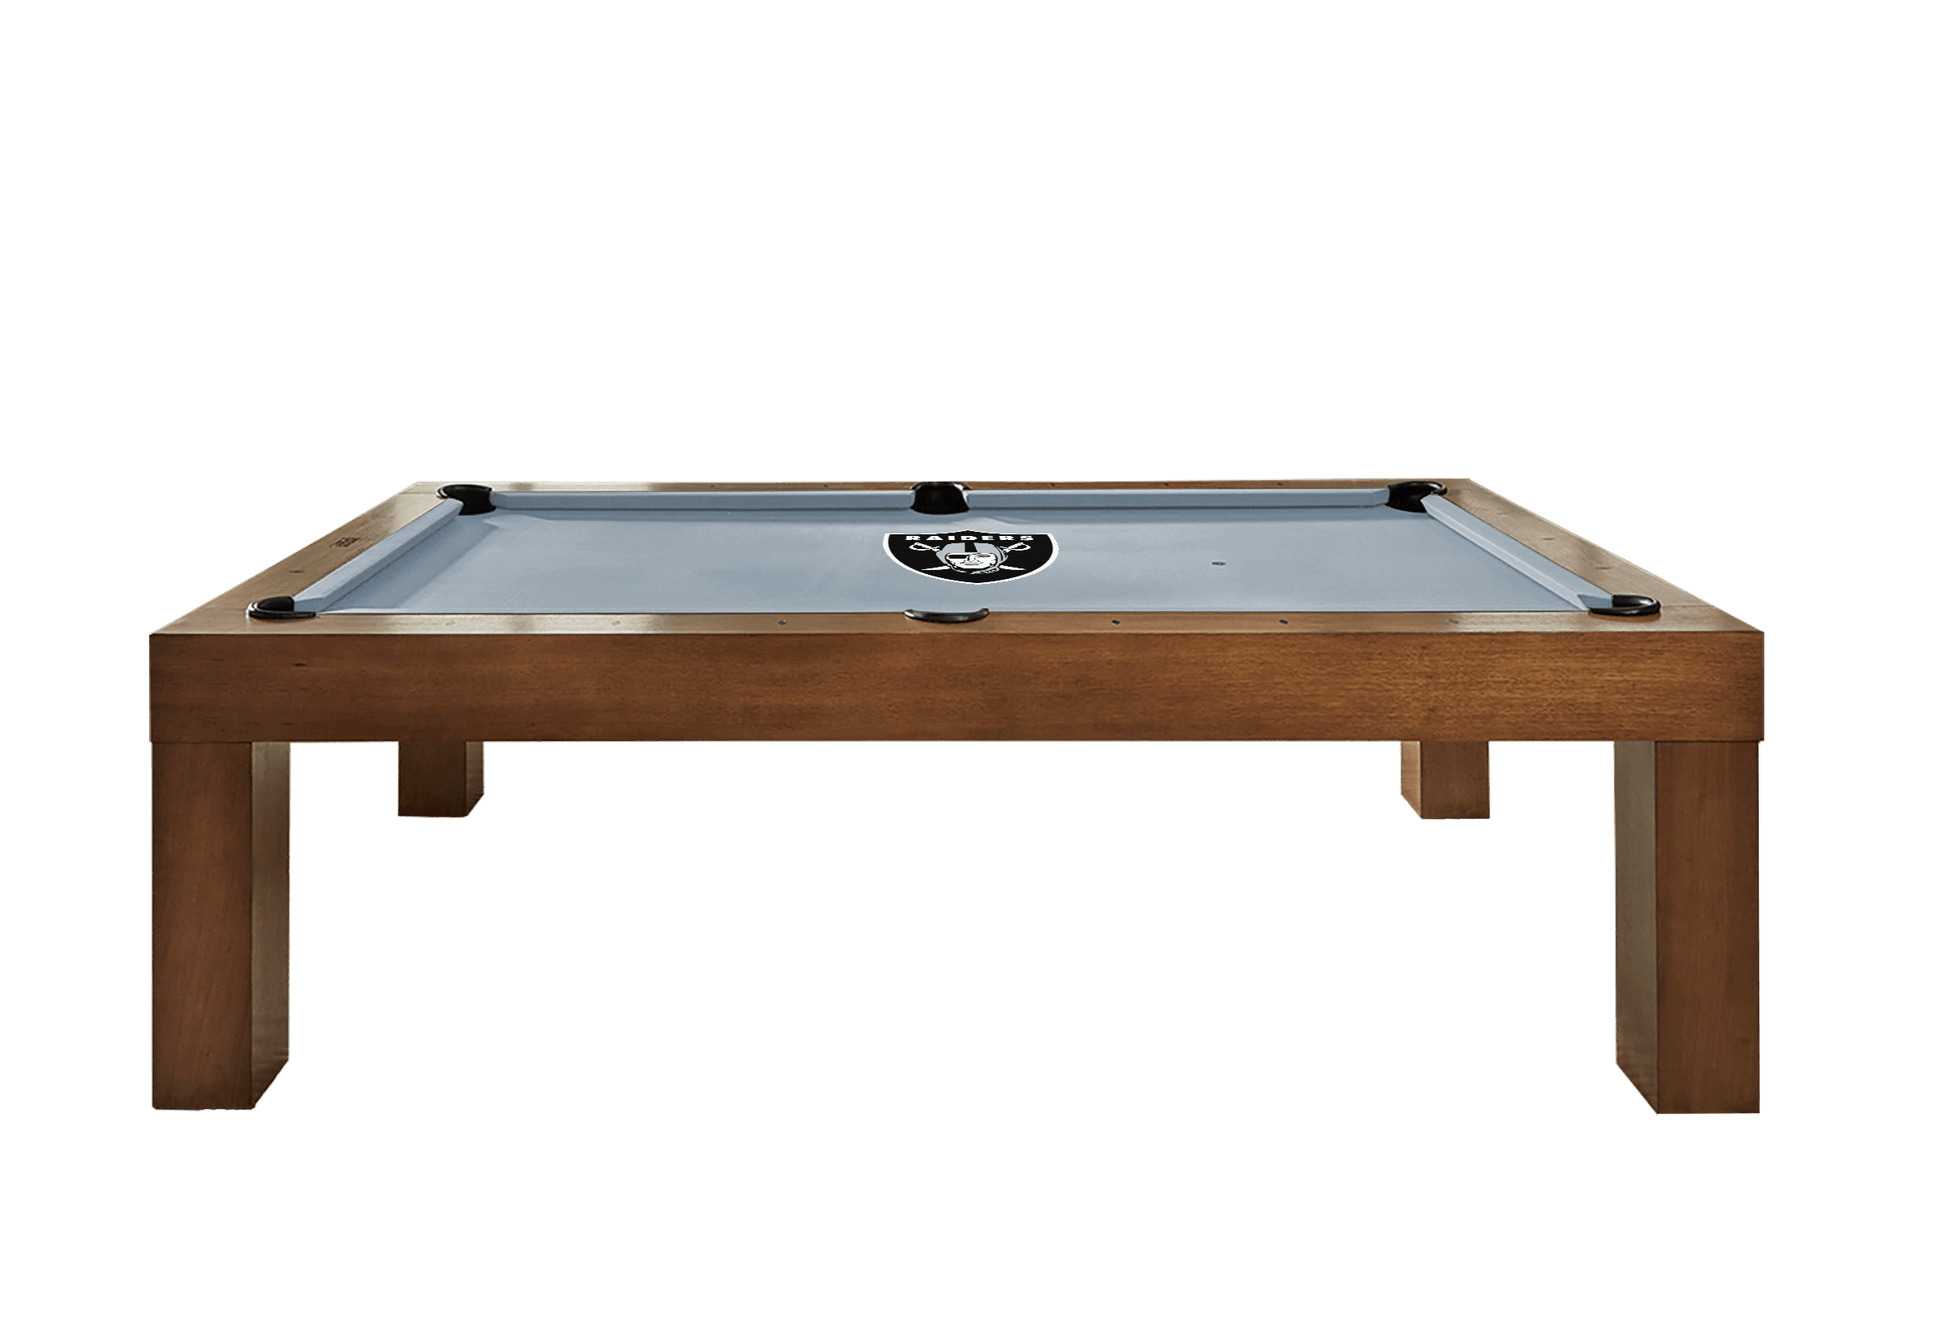 Las Vegas Raiders Premium Pool Table Bundle - Walnut Pool Bundle Home Arcade Games   